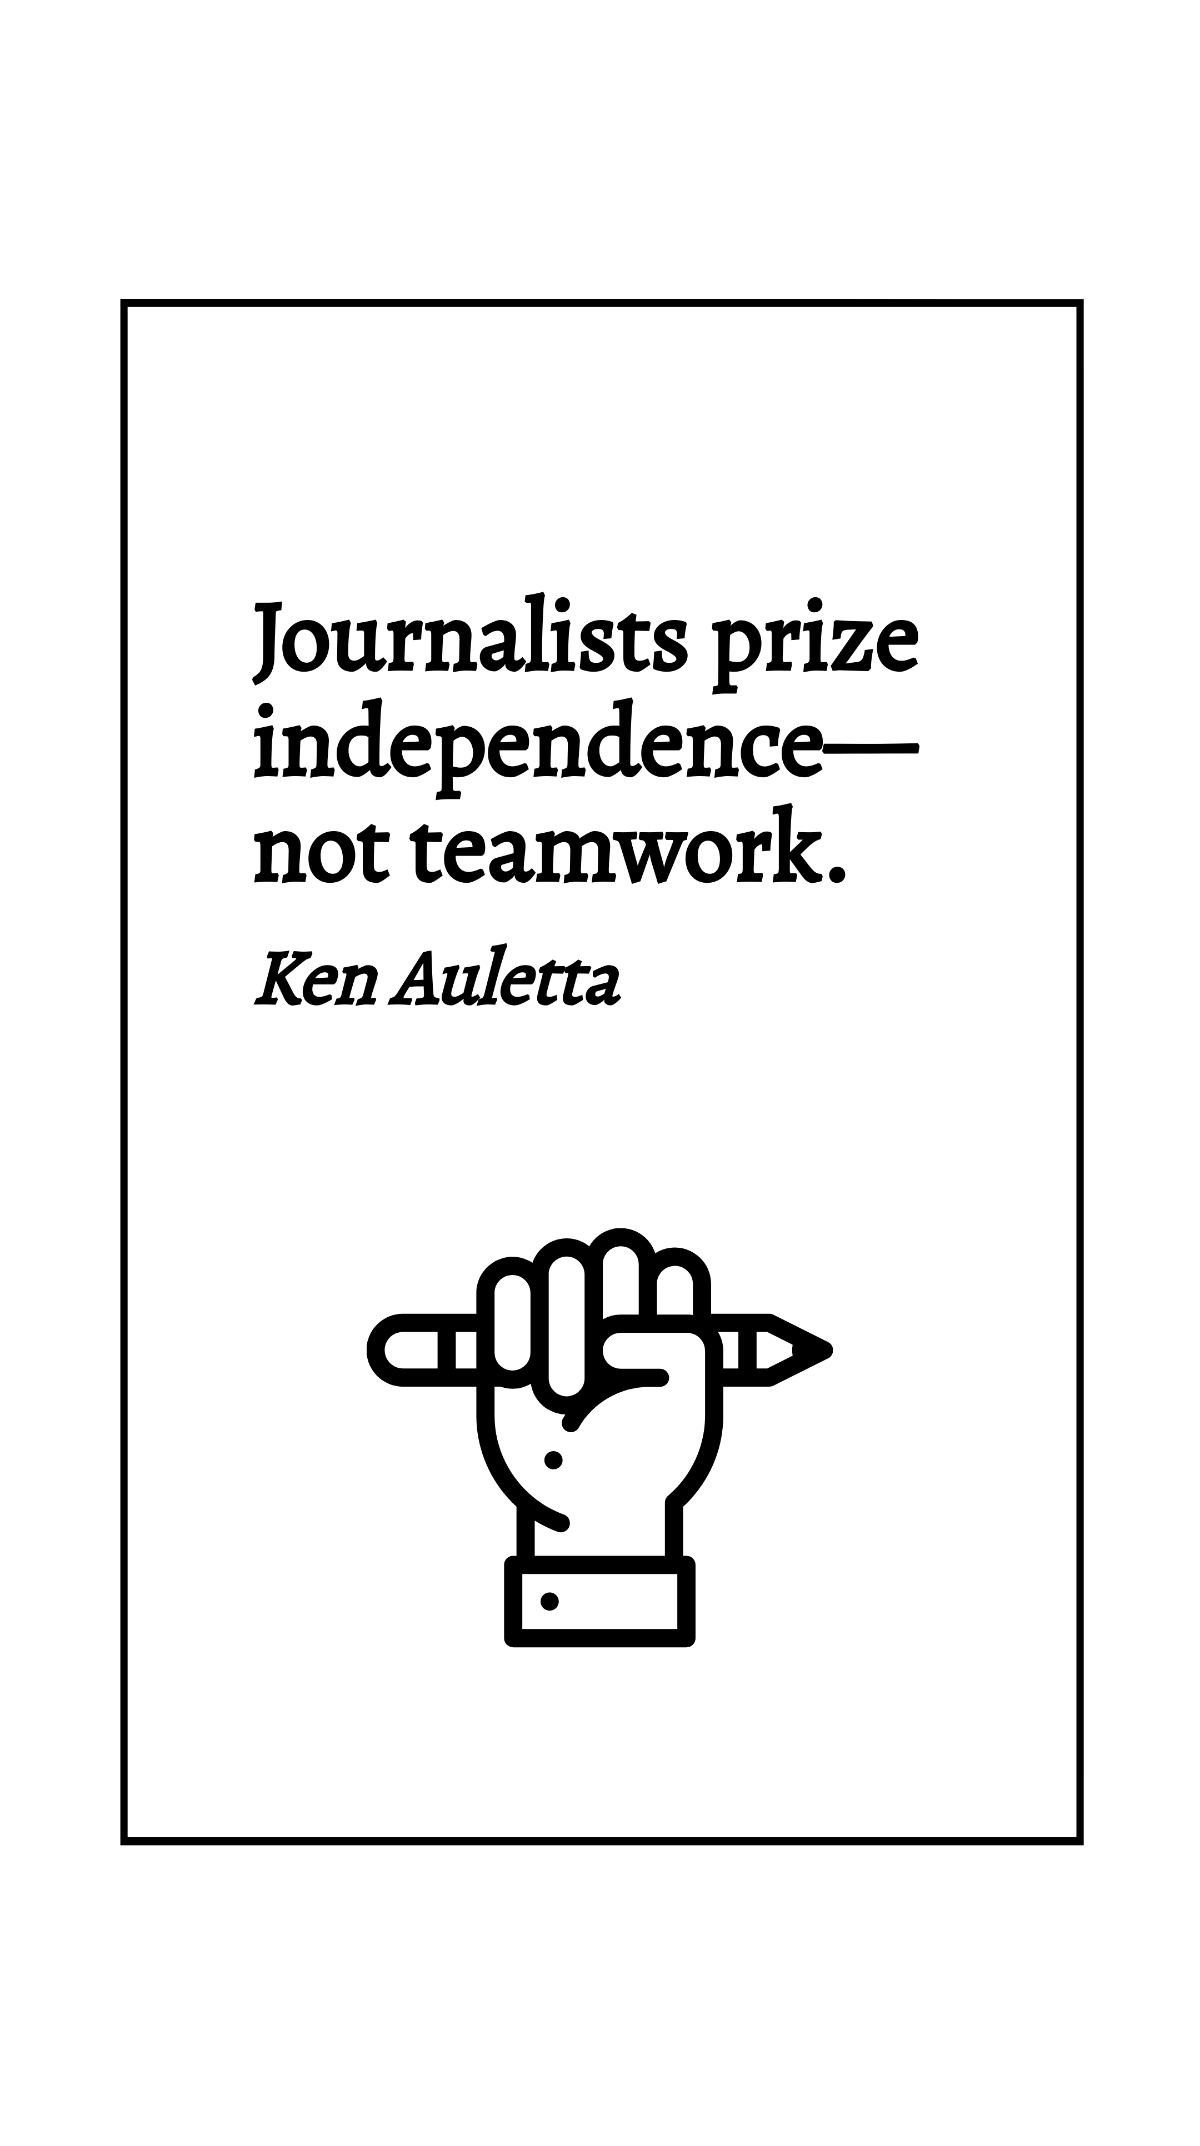 Ken Auletta - Journalists prize independence - not teamwork.